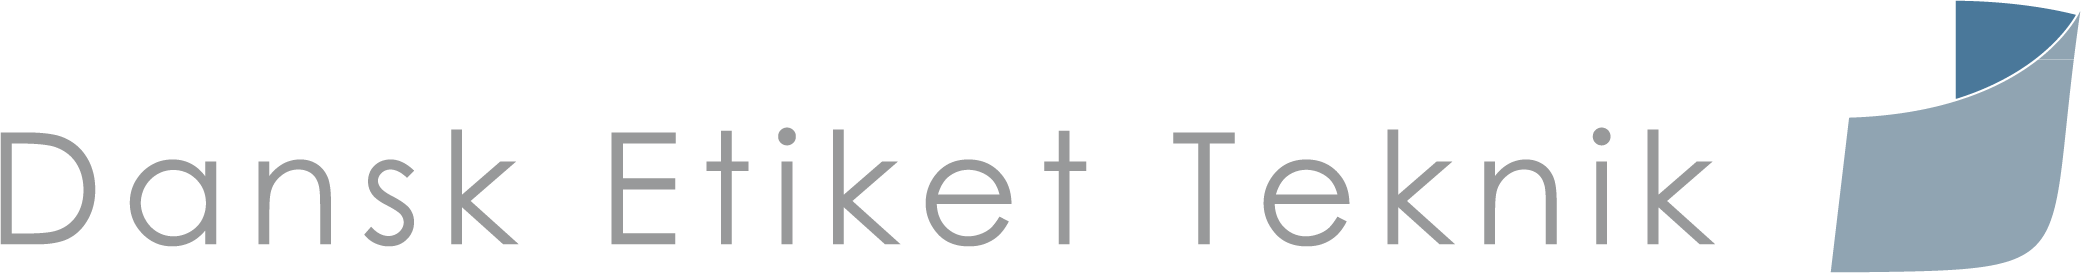 Dansk Etiket Teknik Logo